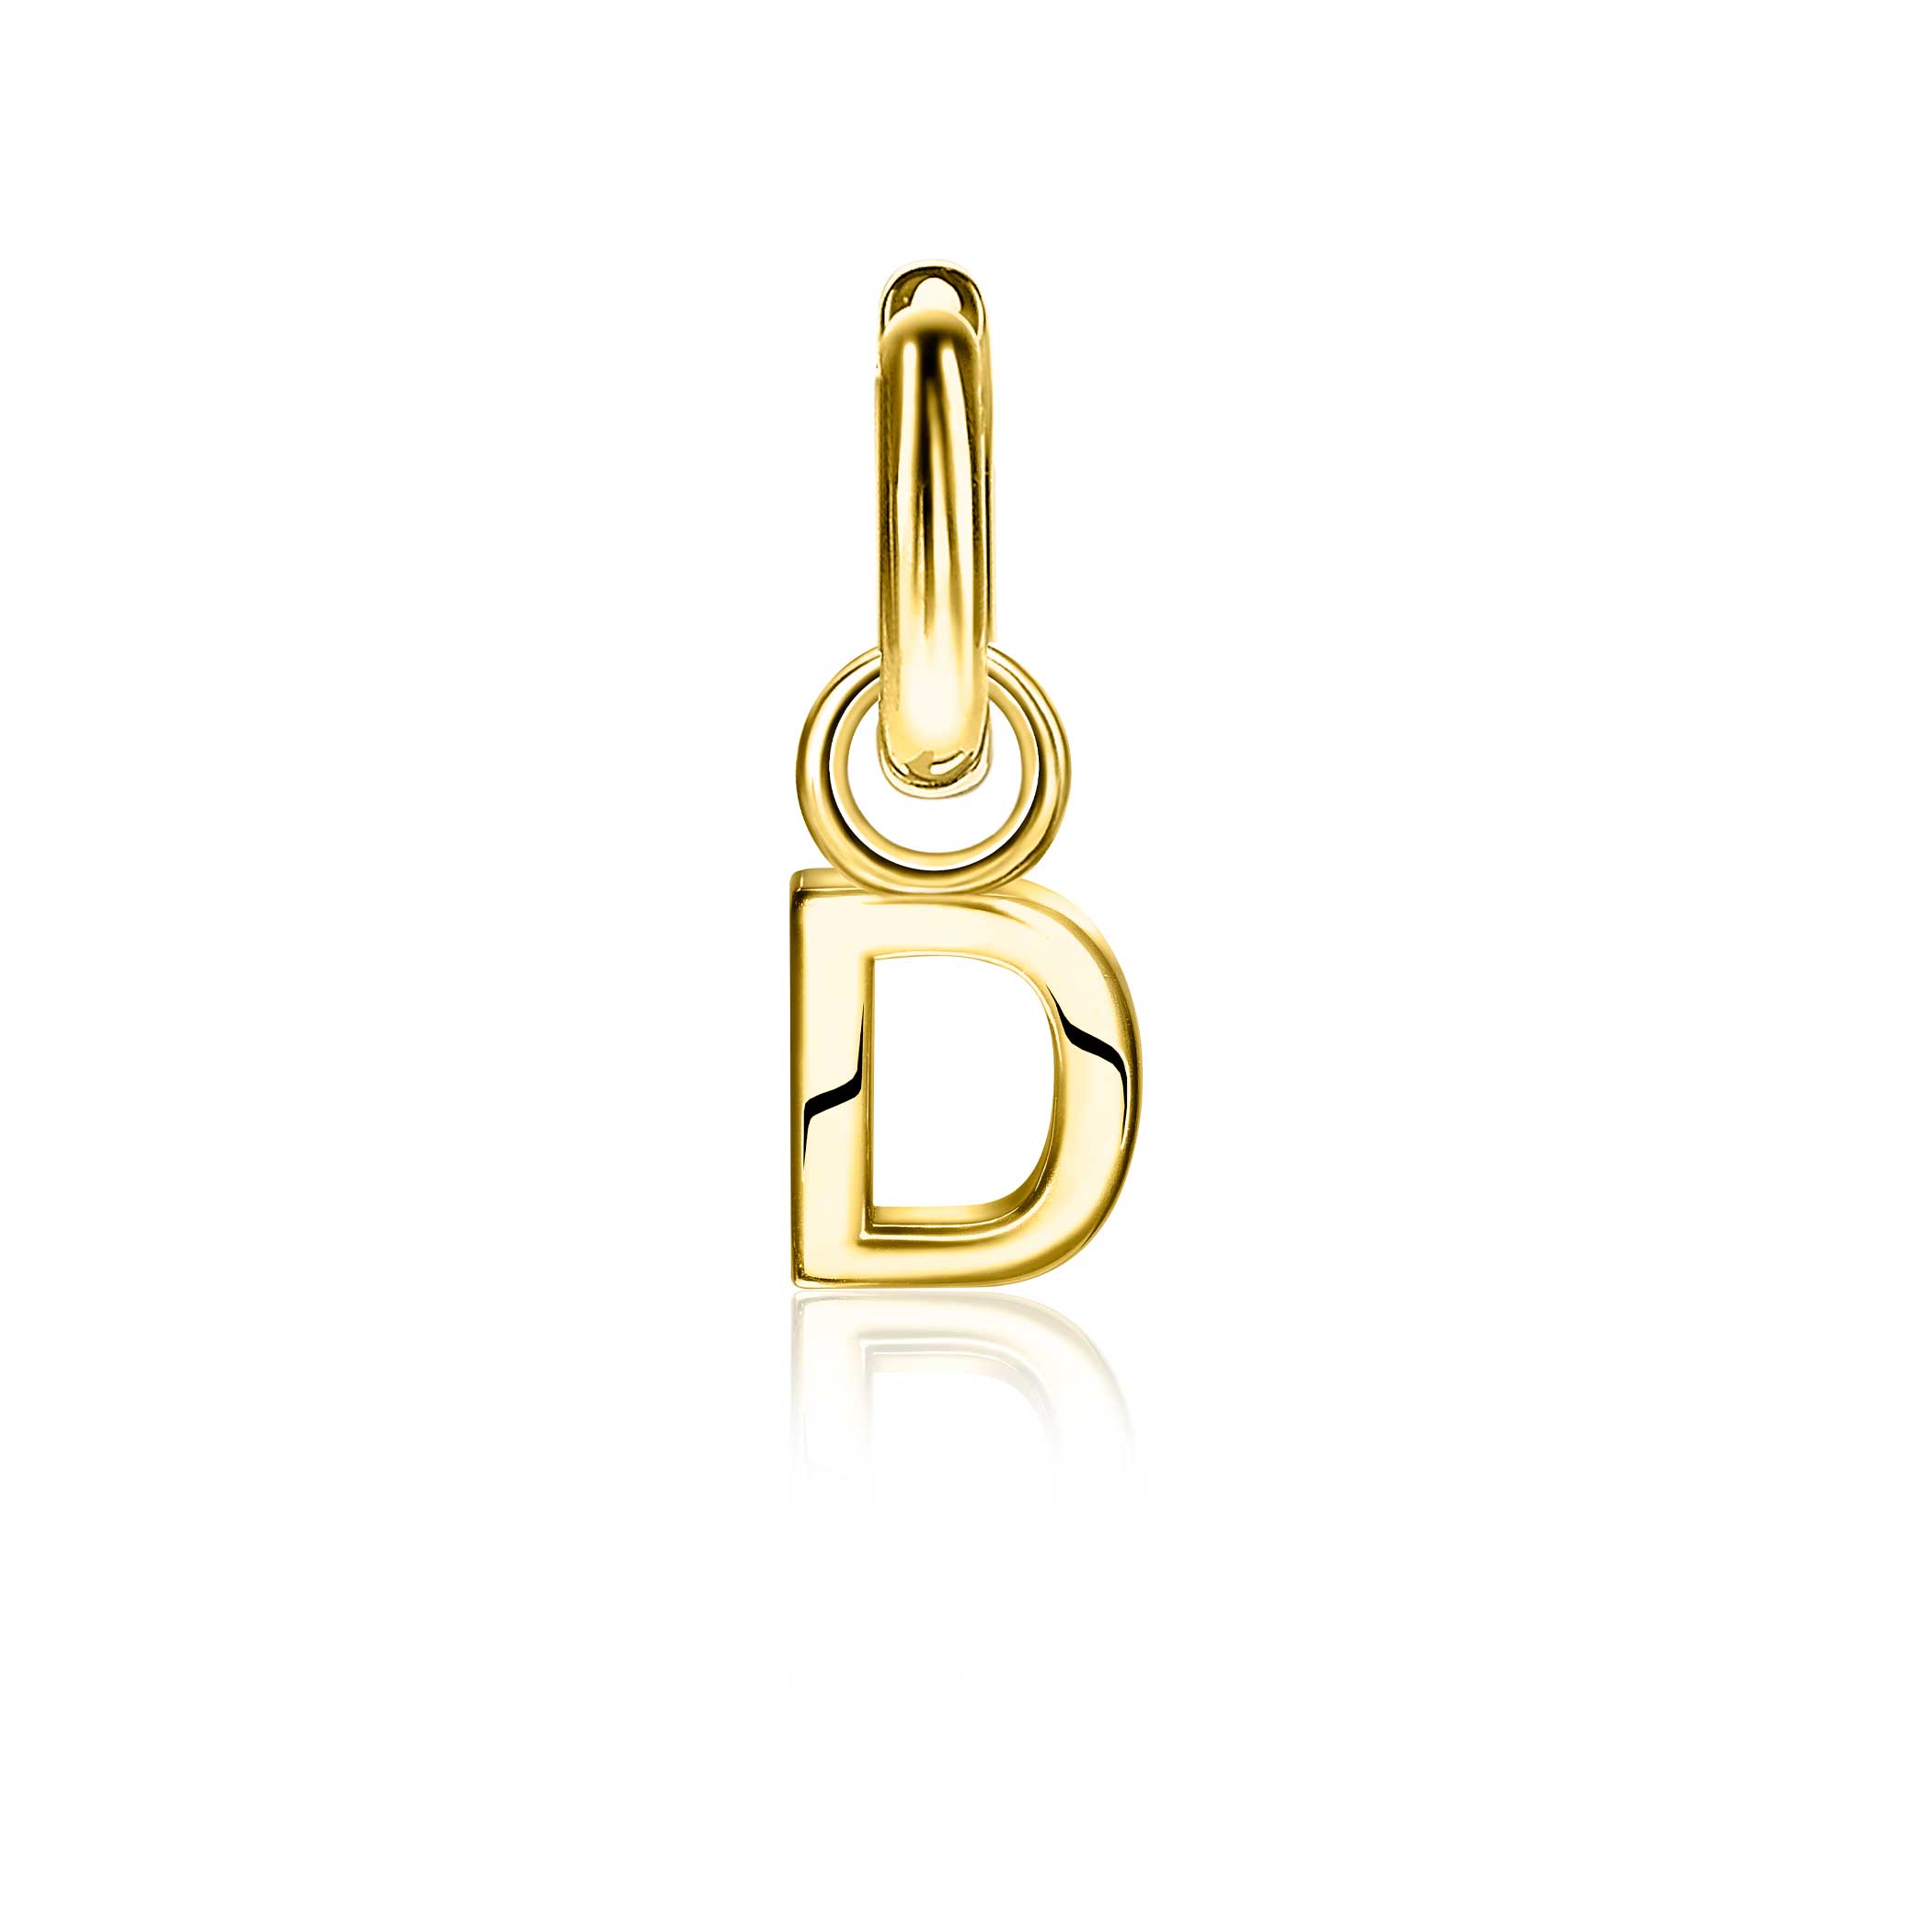 ZINZI Gold Plated Letter Earrings Pendant D price per piece ZICH2145D (excl. hoop earrings)